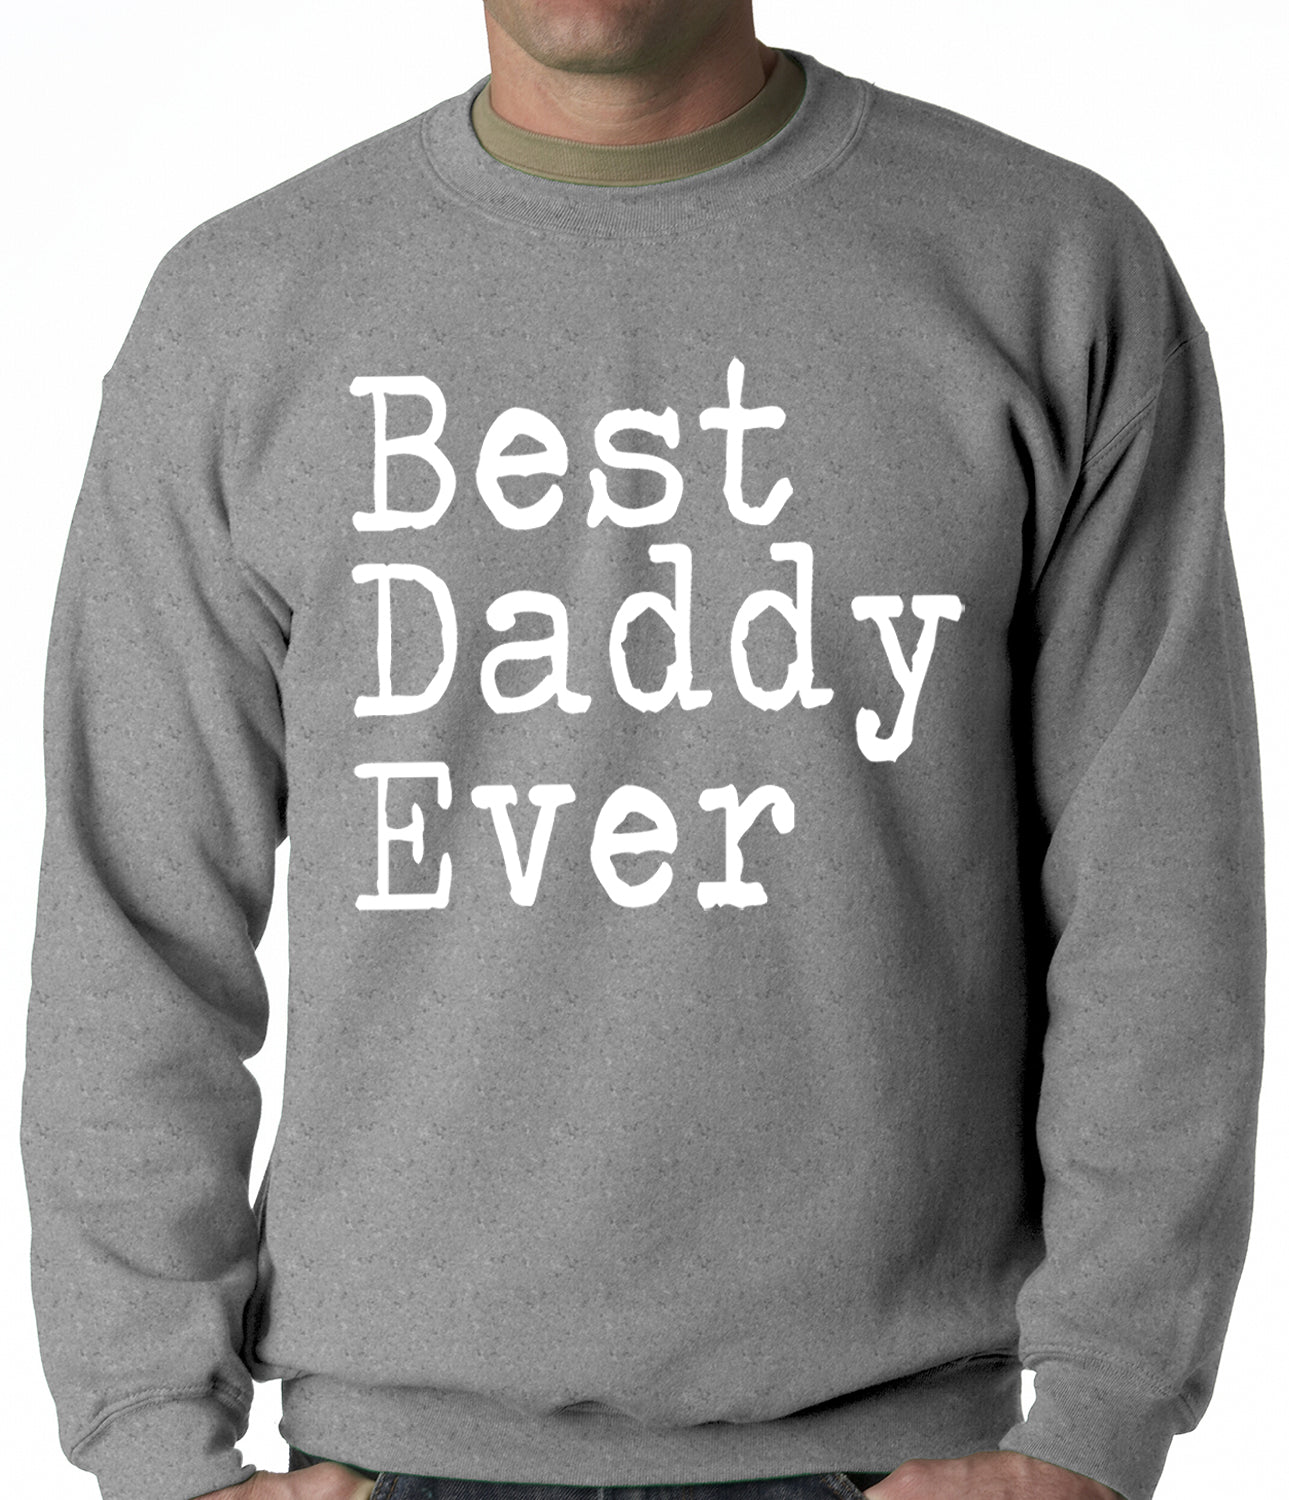 Best Daddy Ever Adult Crewneck